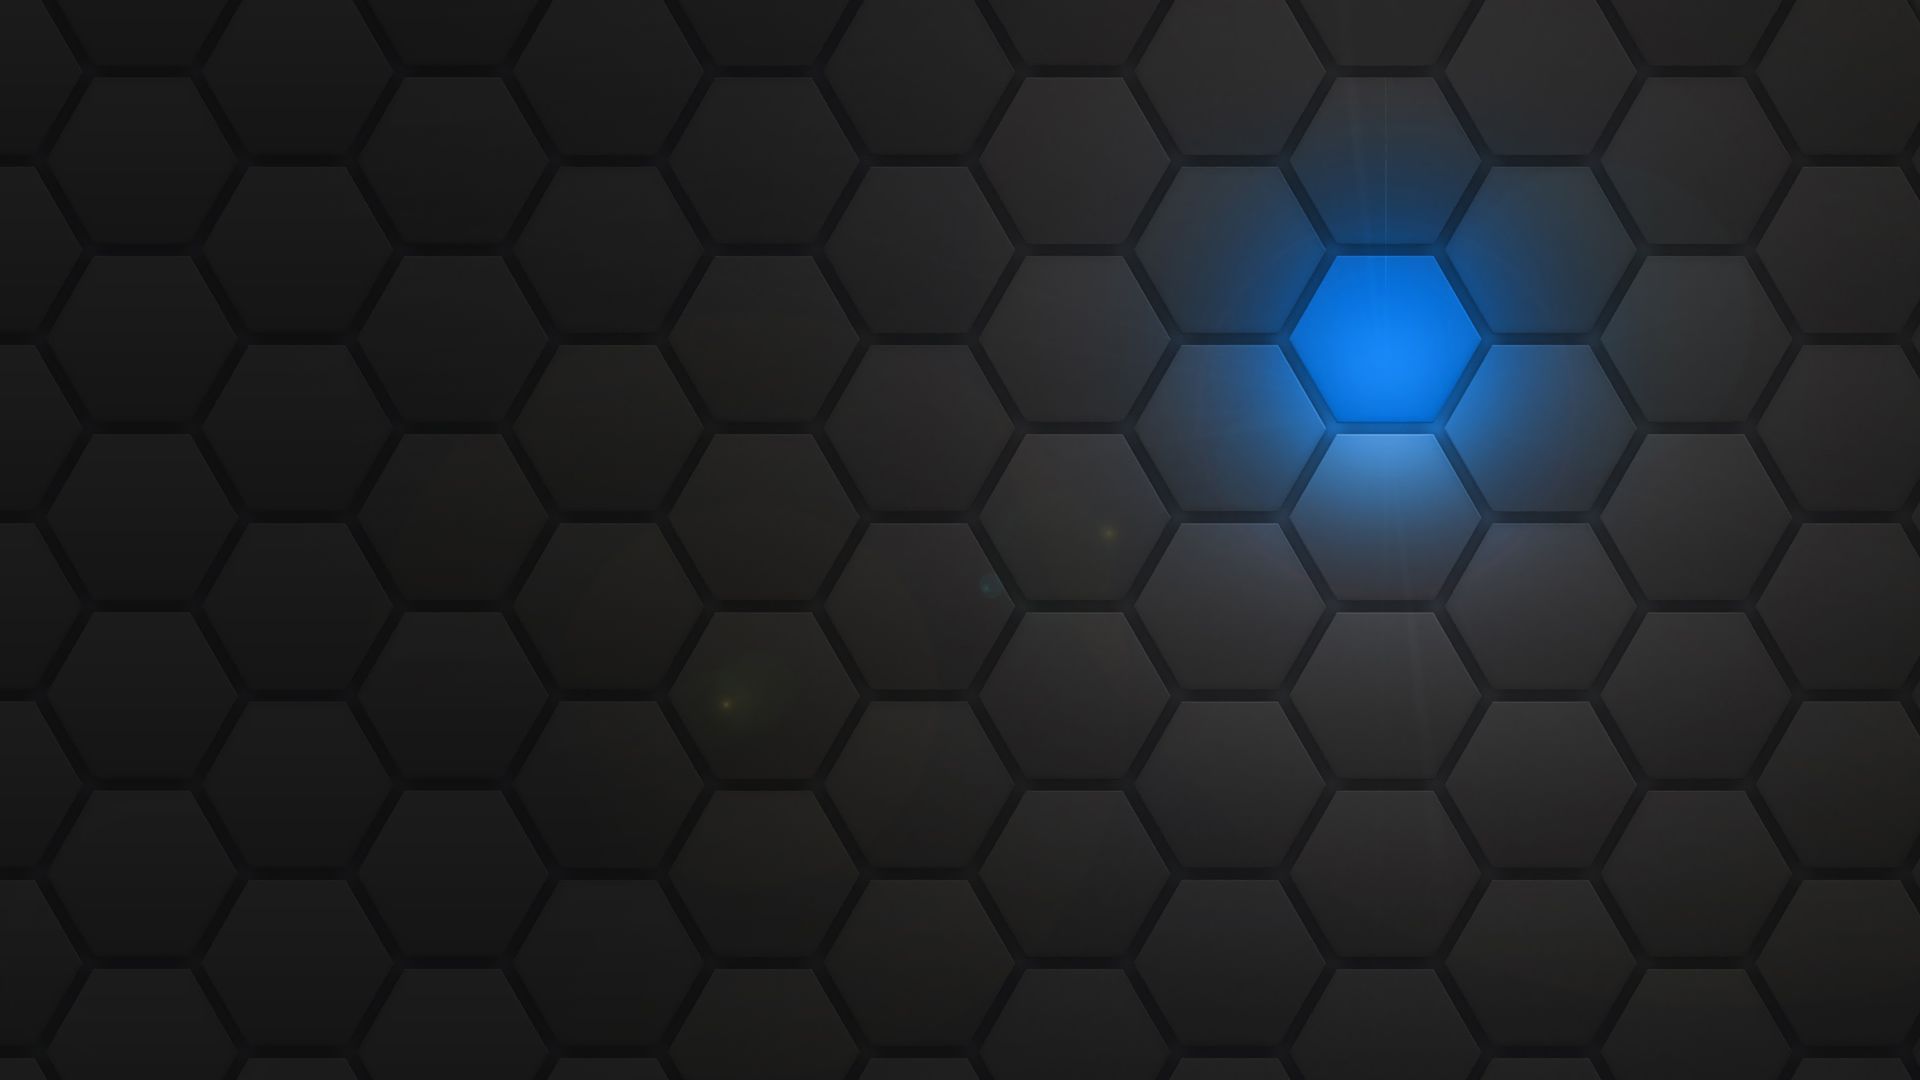 Blue light behind the honeycomb pattern Wallpaper 29001